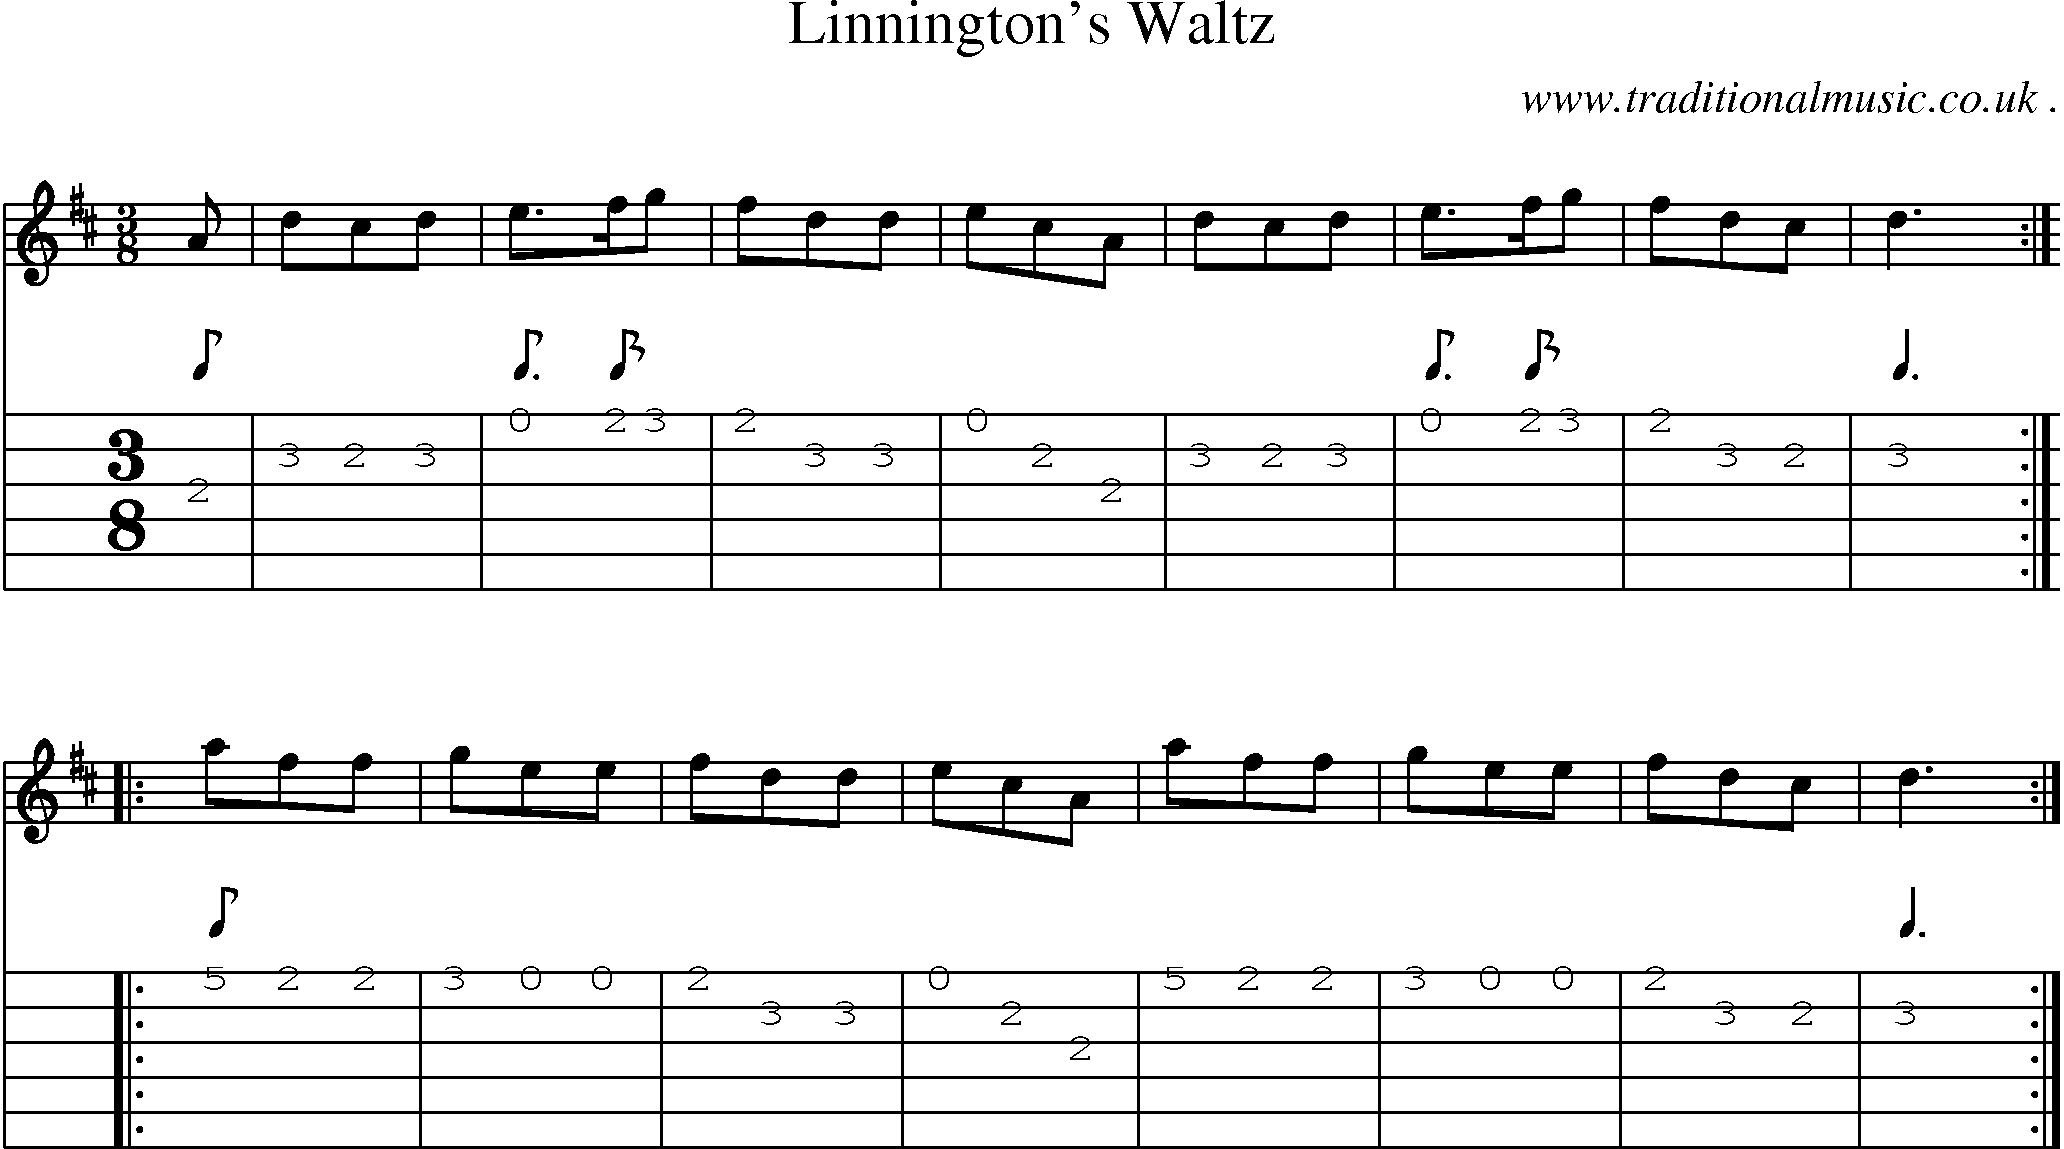 Sheet-Music and Guitar Tabs for Linningtons Waltz